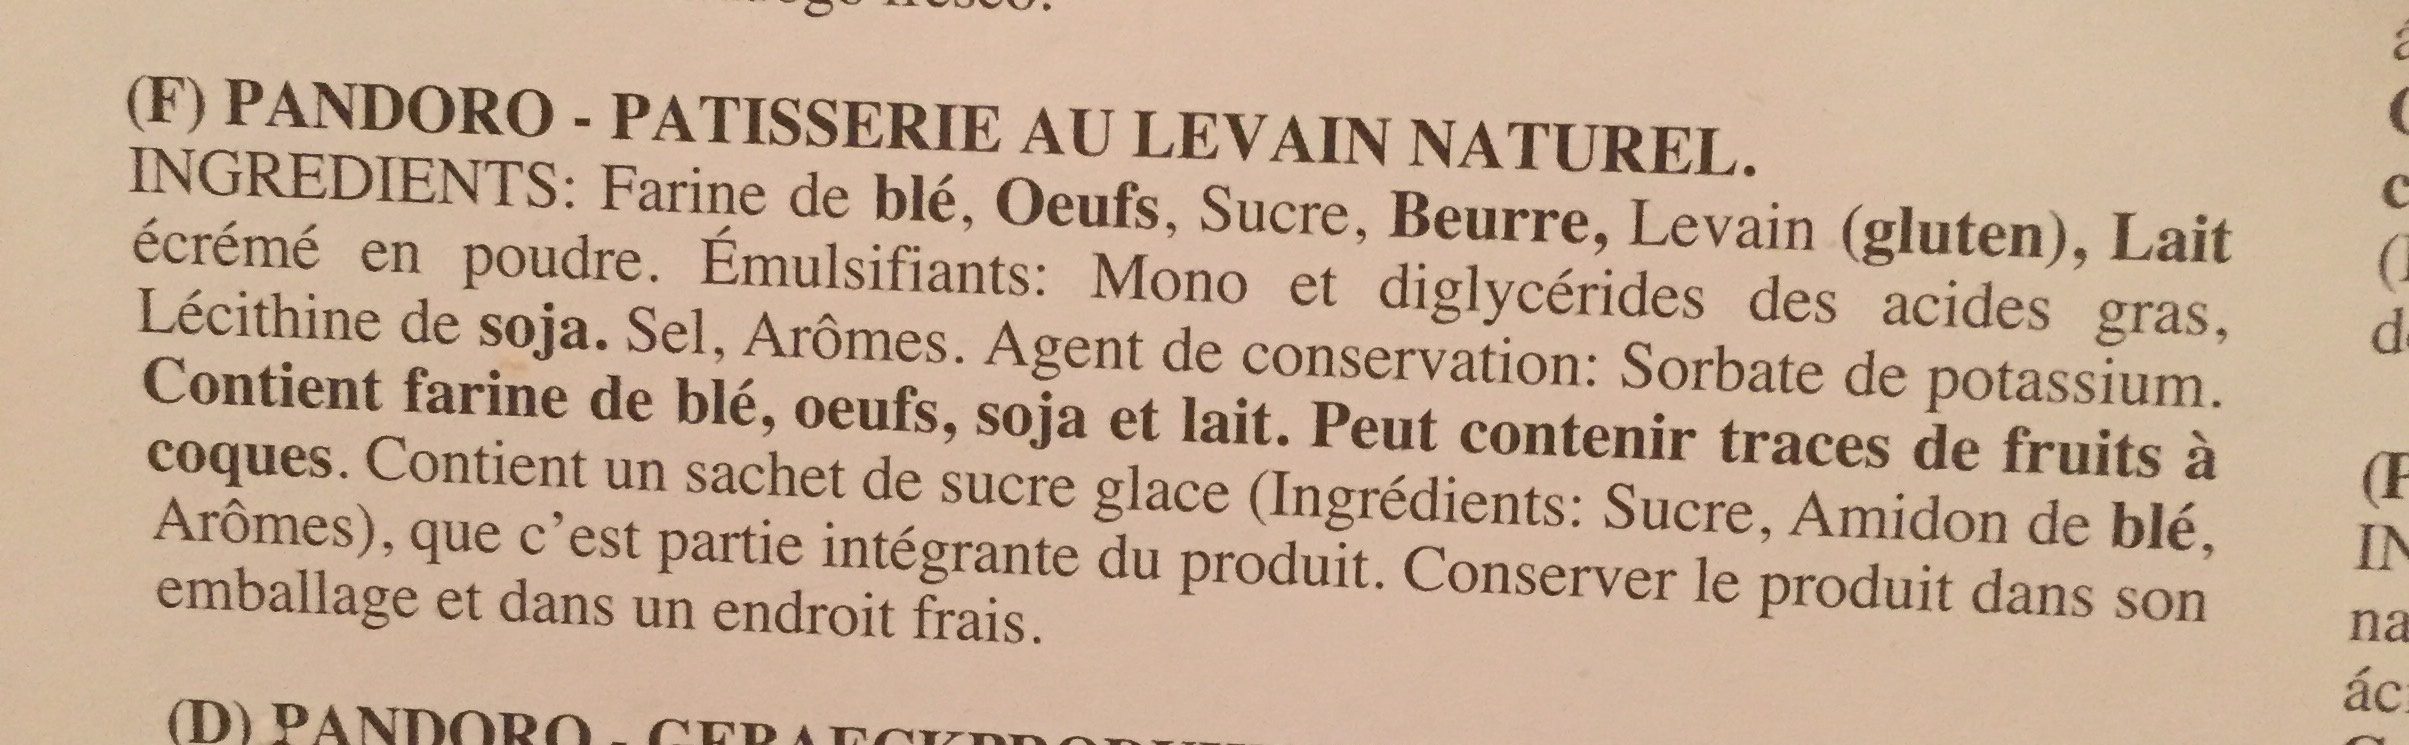 Pandoro - Pâtisserie au levain naturel - Ingrediënten - fr